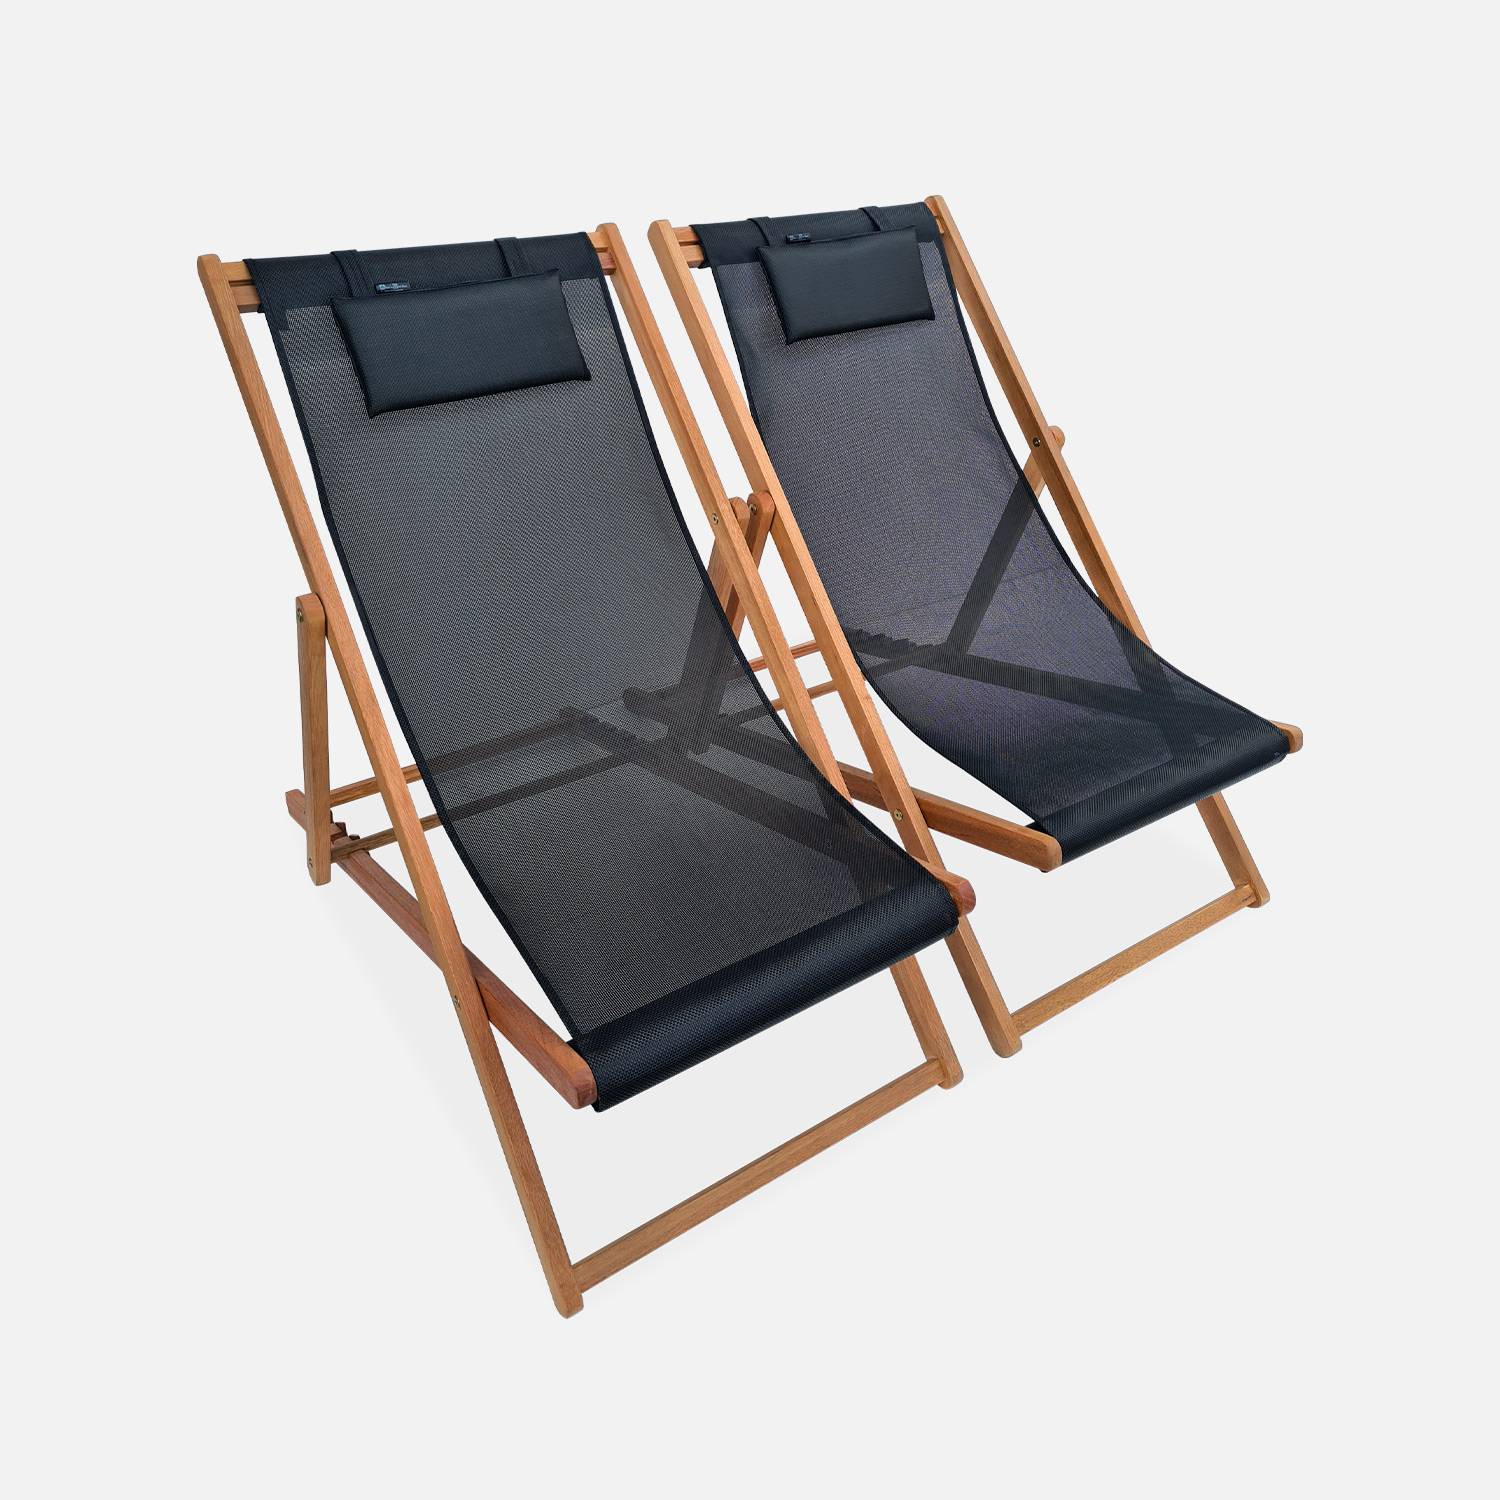 Pair of pre-oiled FSC eucalyptus deck chairs with headrest cushions - Creus - Wood/Black Photo2